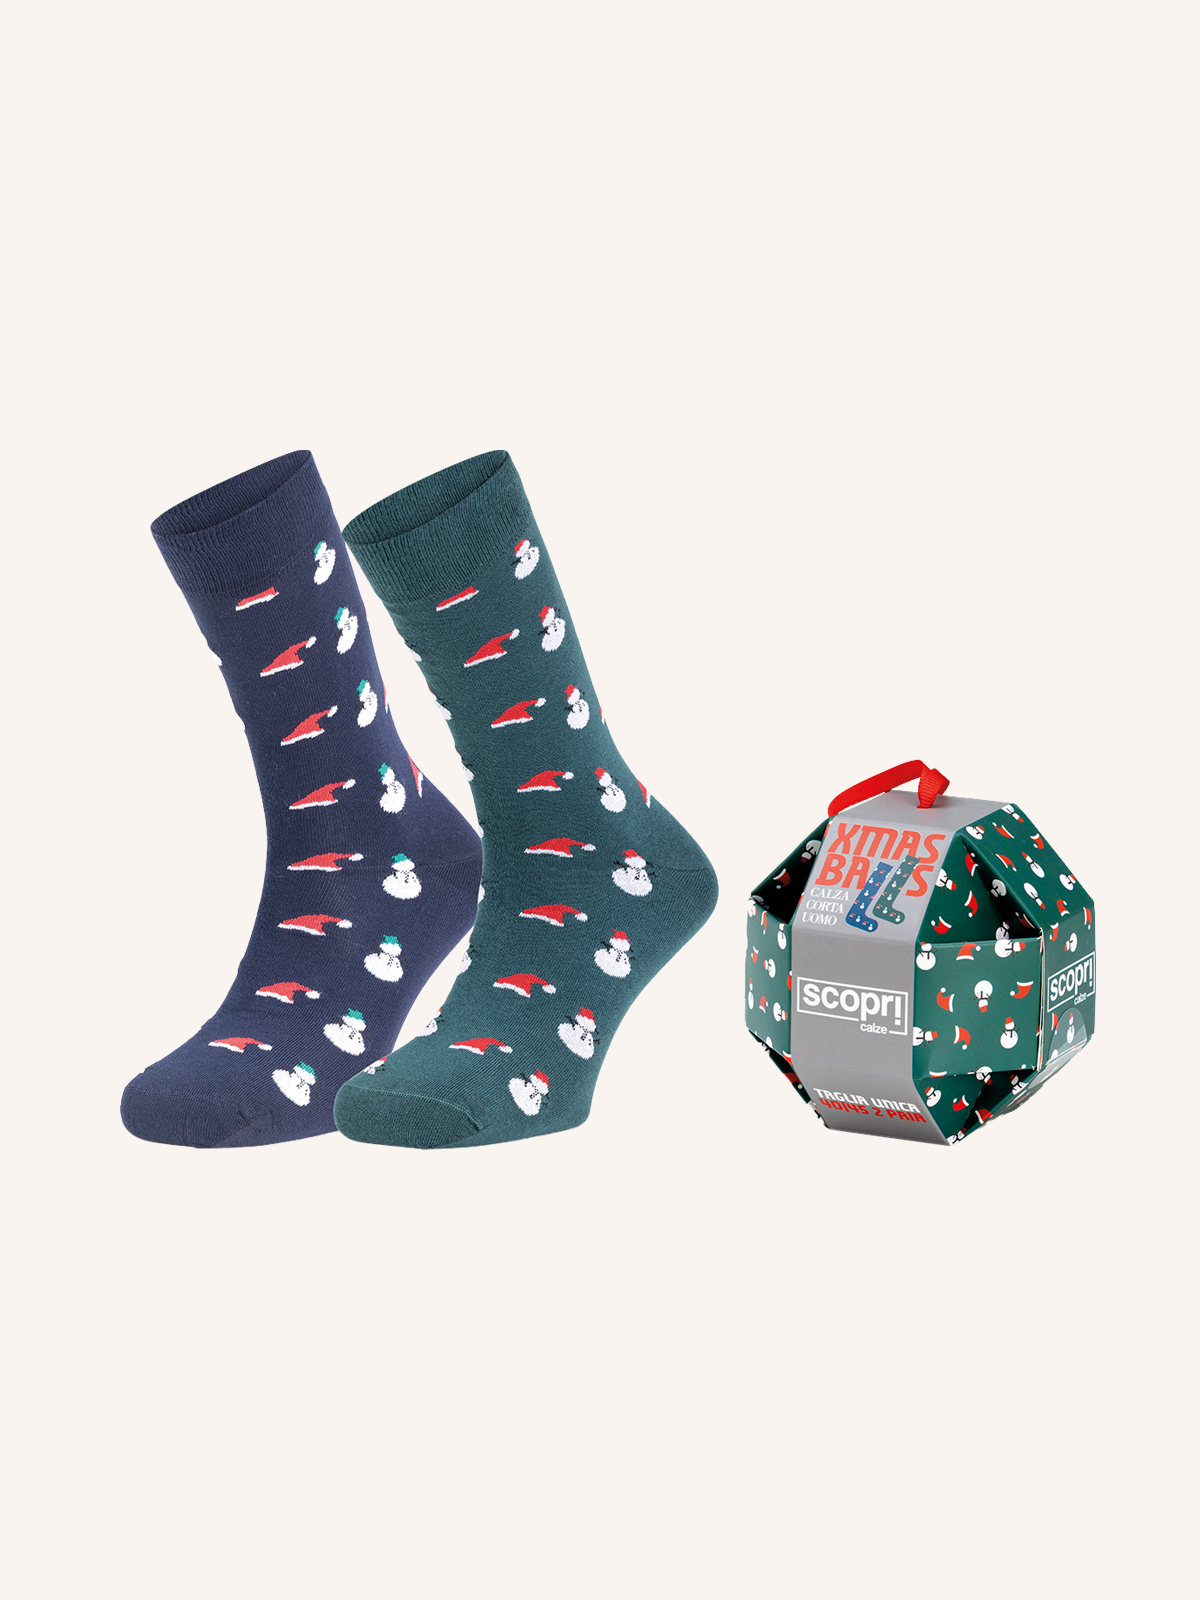 Short Cotton Socks for Men | Christmas Fantasy | Pack of 2 pairs | Xmas UC